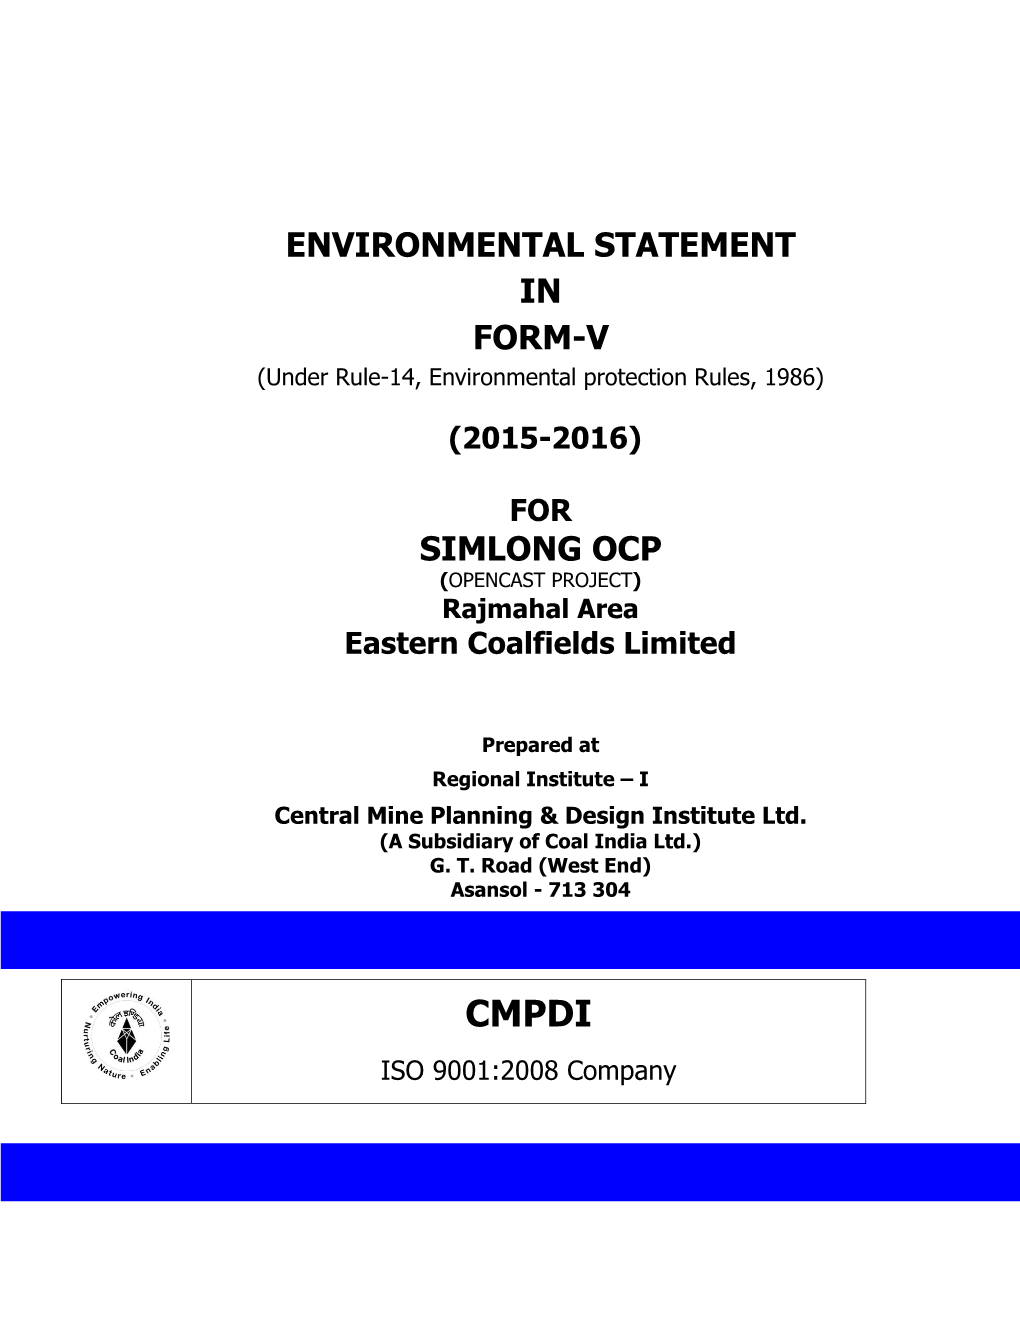 Environmental Statement in Form-V Simlong